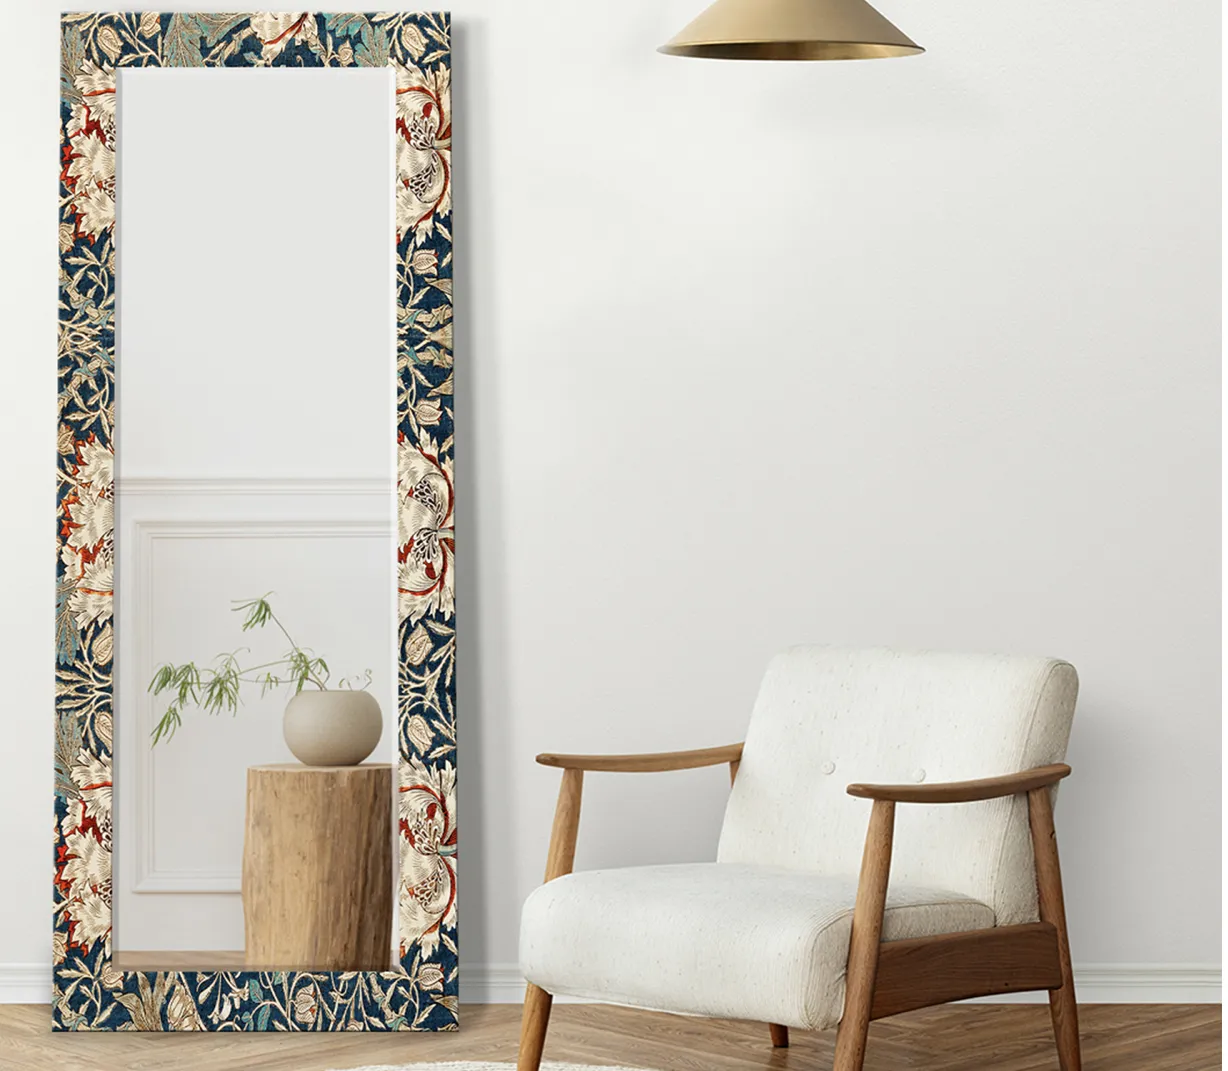 Wooden Street's bohemian floral mirror